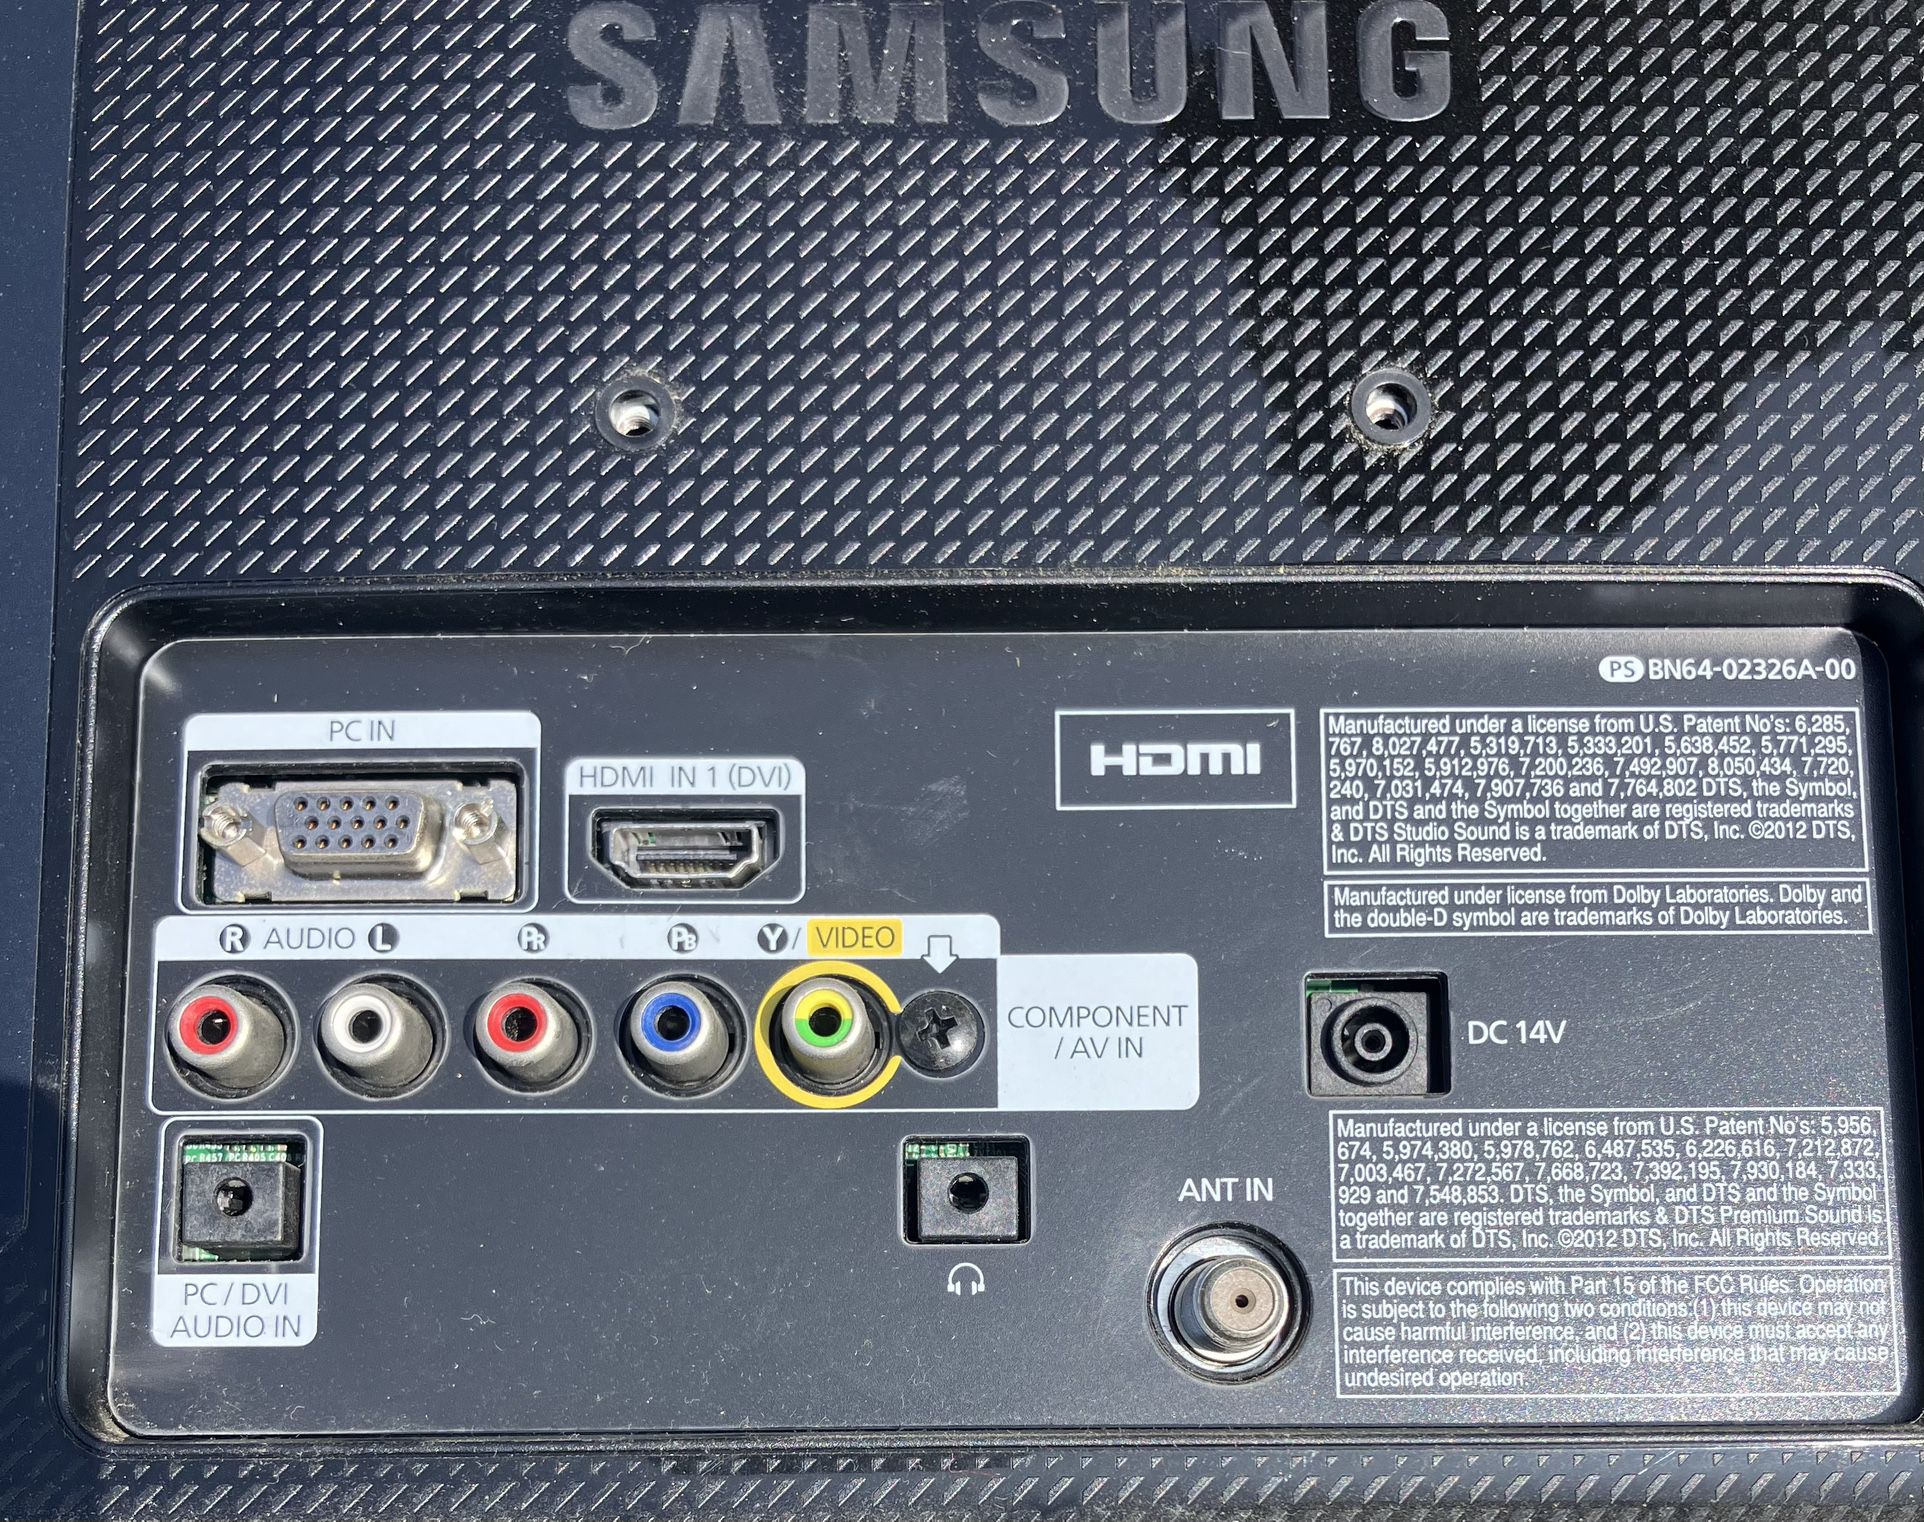 Samsung 24” TV Monitor